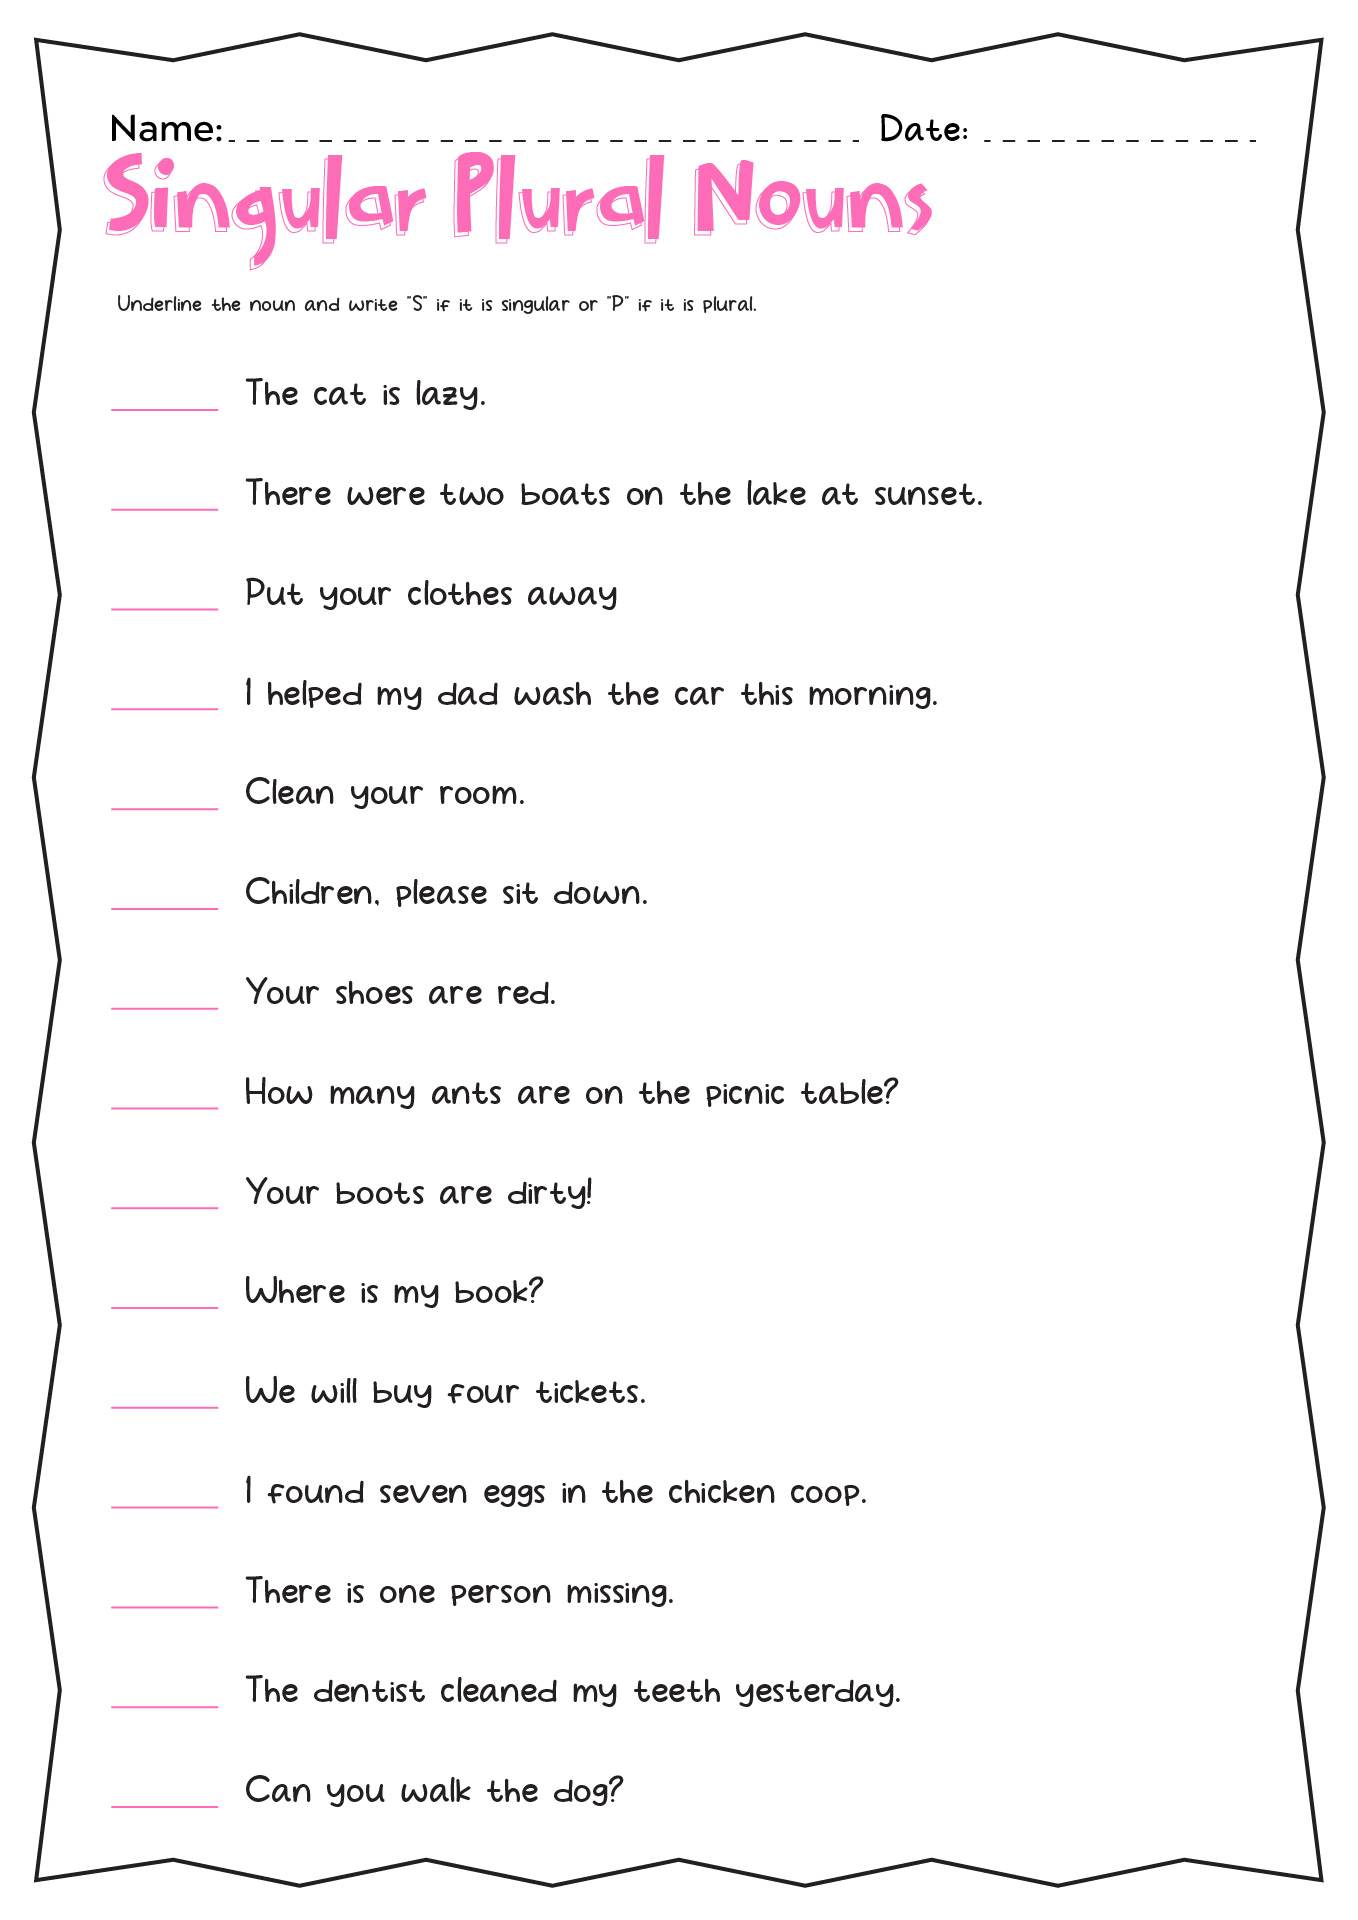 Singular Plural Nouns Worksheets 2nd Grade Image